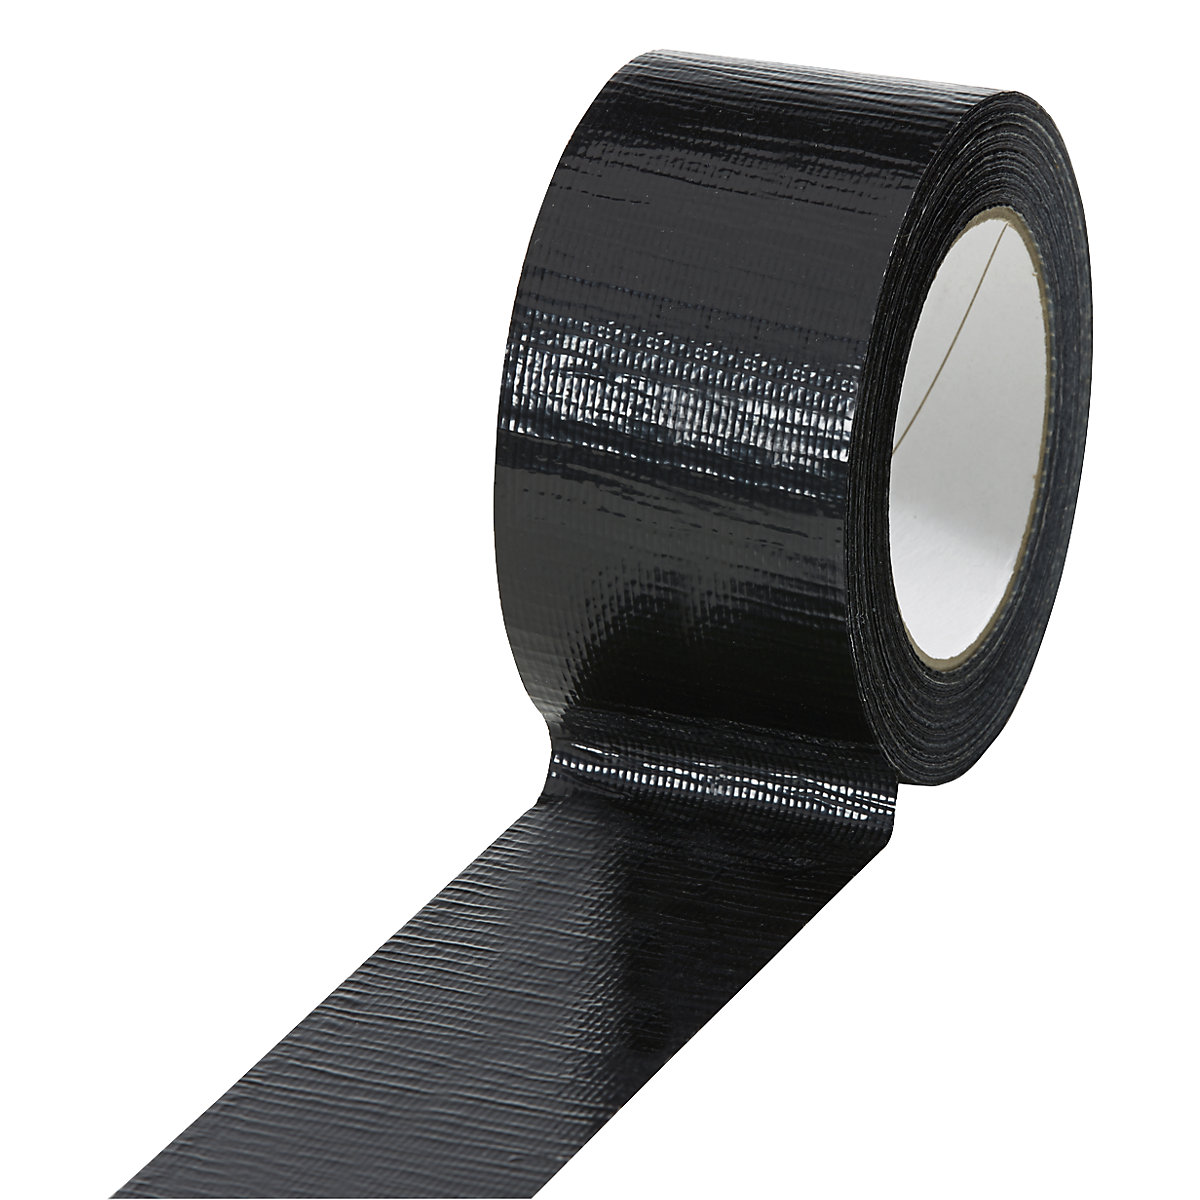 Tkaninová páska, v různých barvách, bal.j. 18 rolí, černá, šířka pásky 50 mm-7